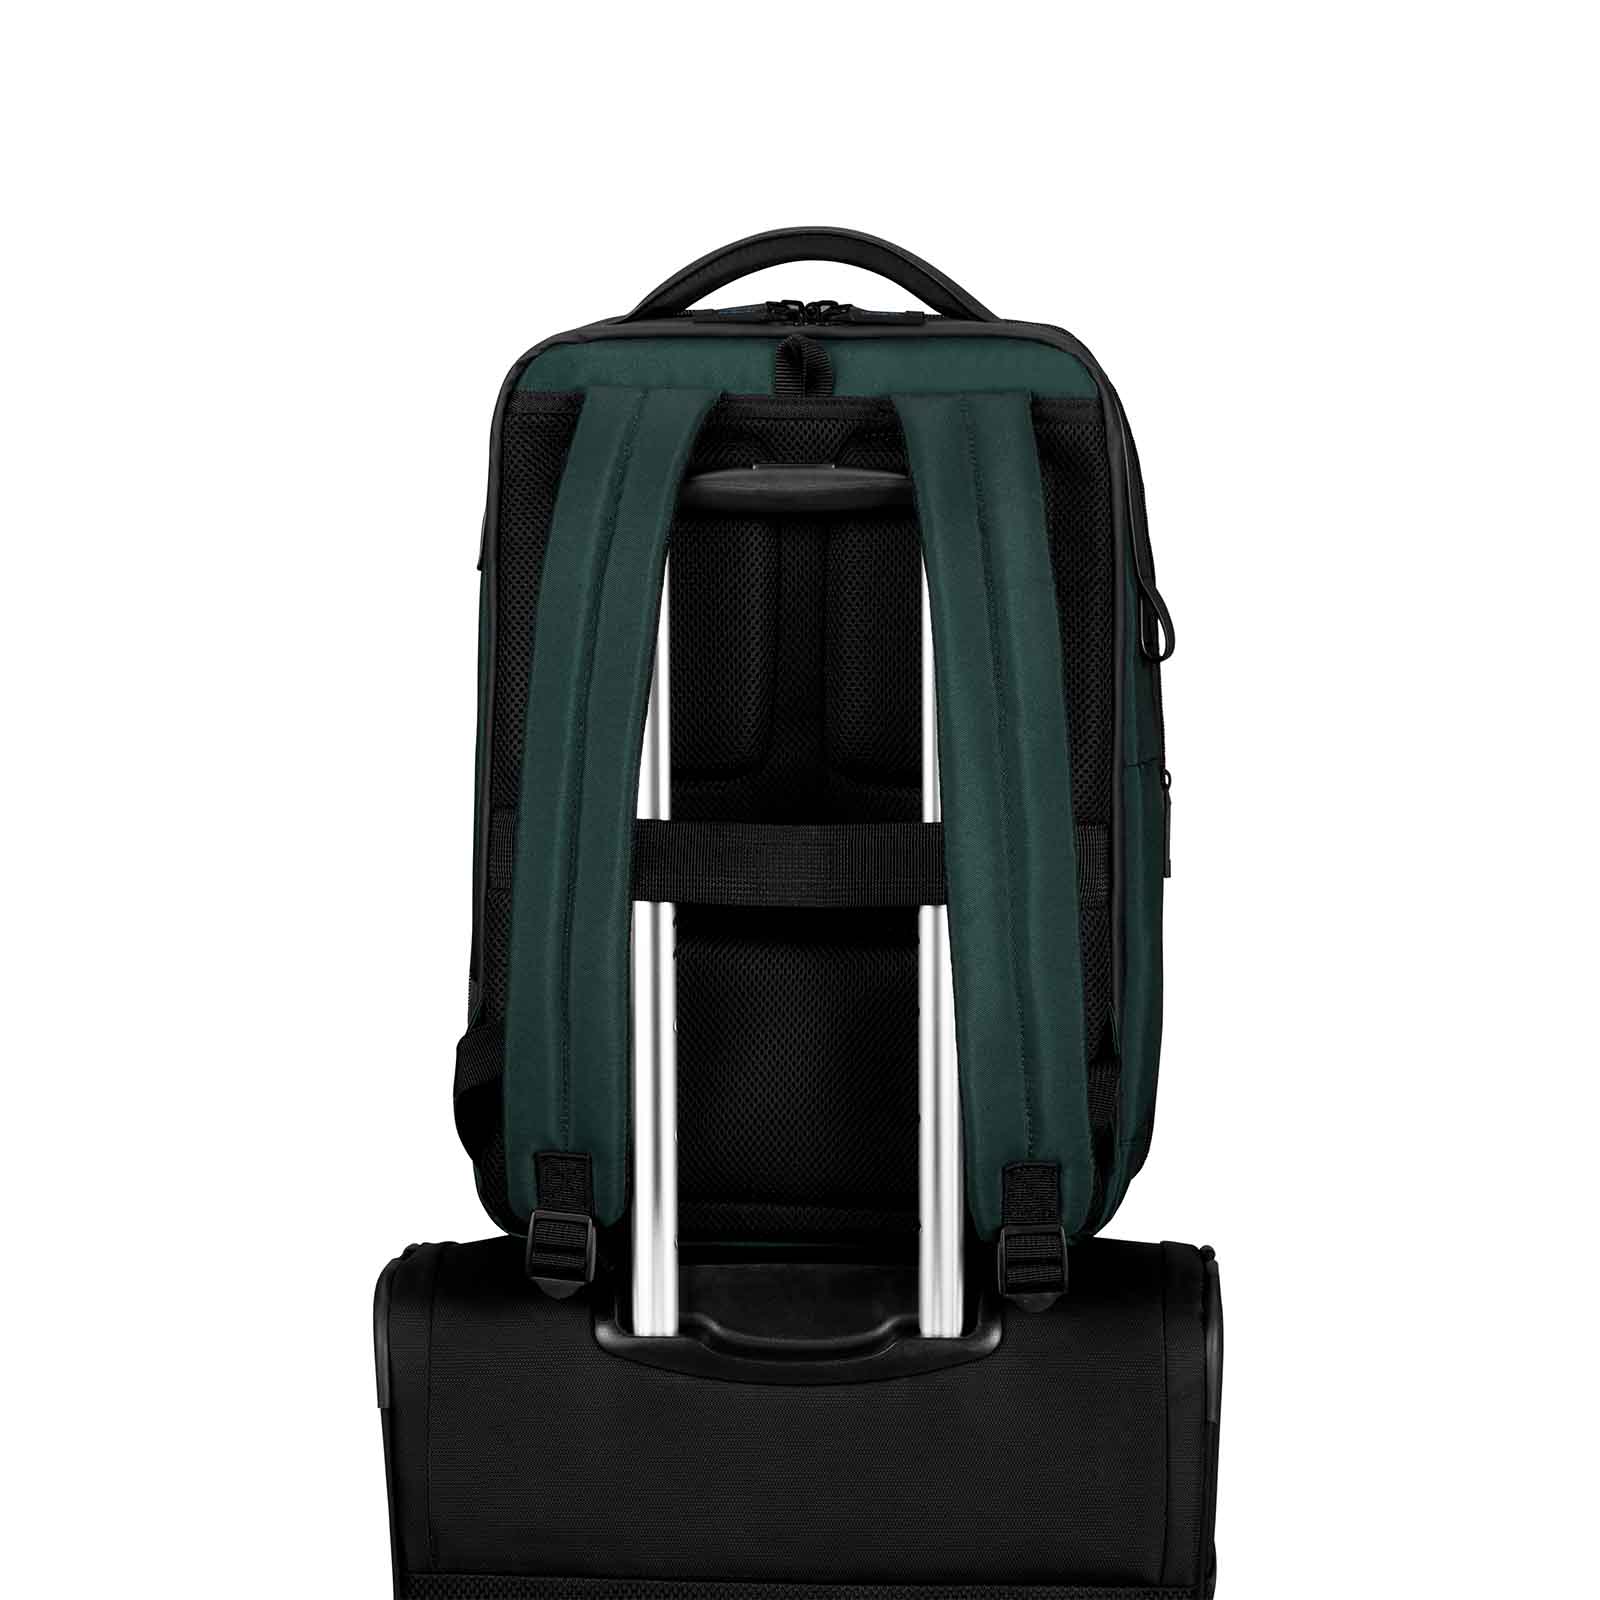 Samsonite-Litepoint-15-Inch-Laptop-Backpack-Urban-Green-Smart-Sleeve